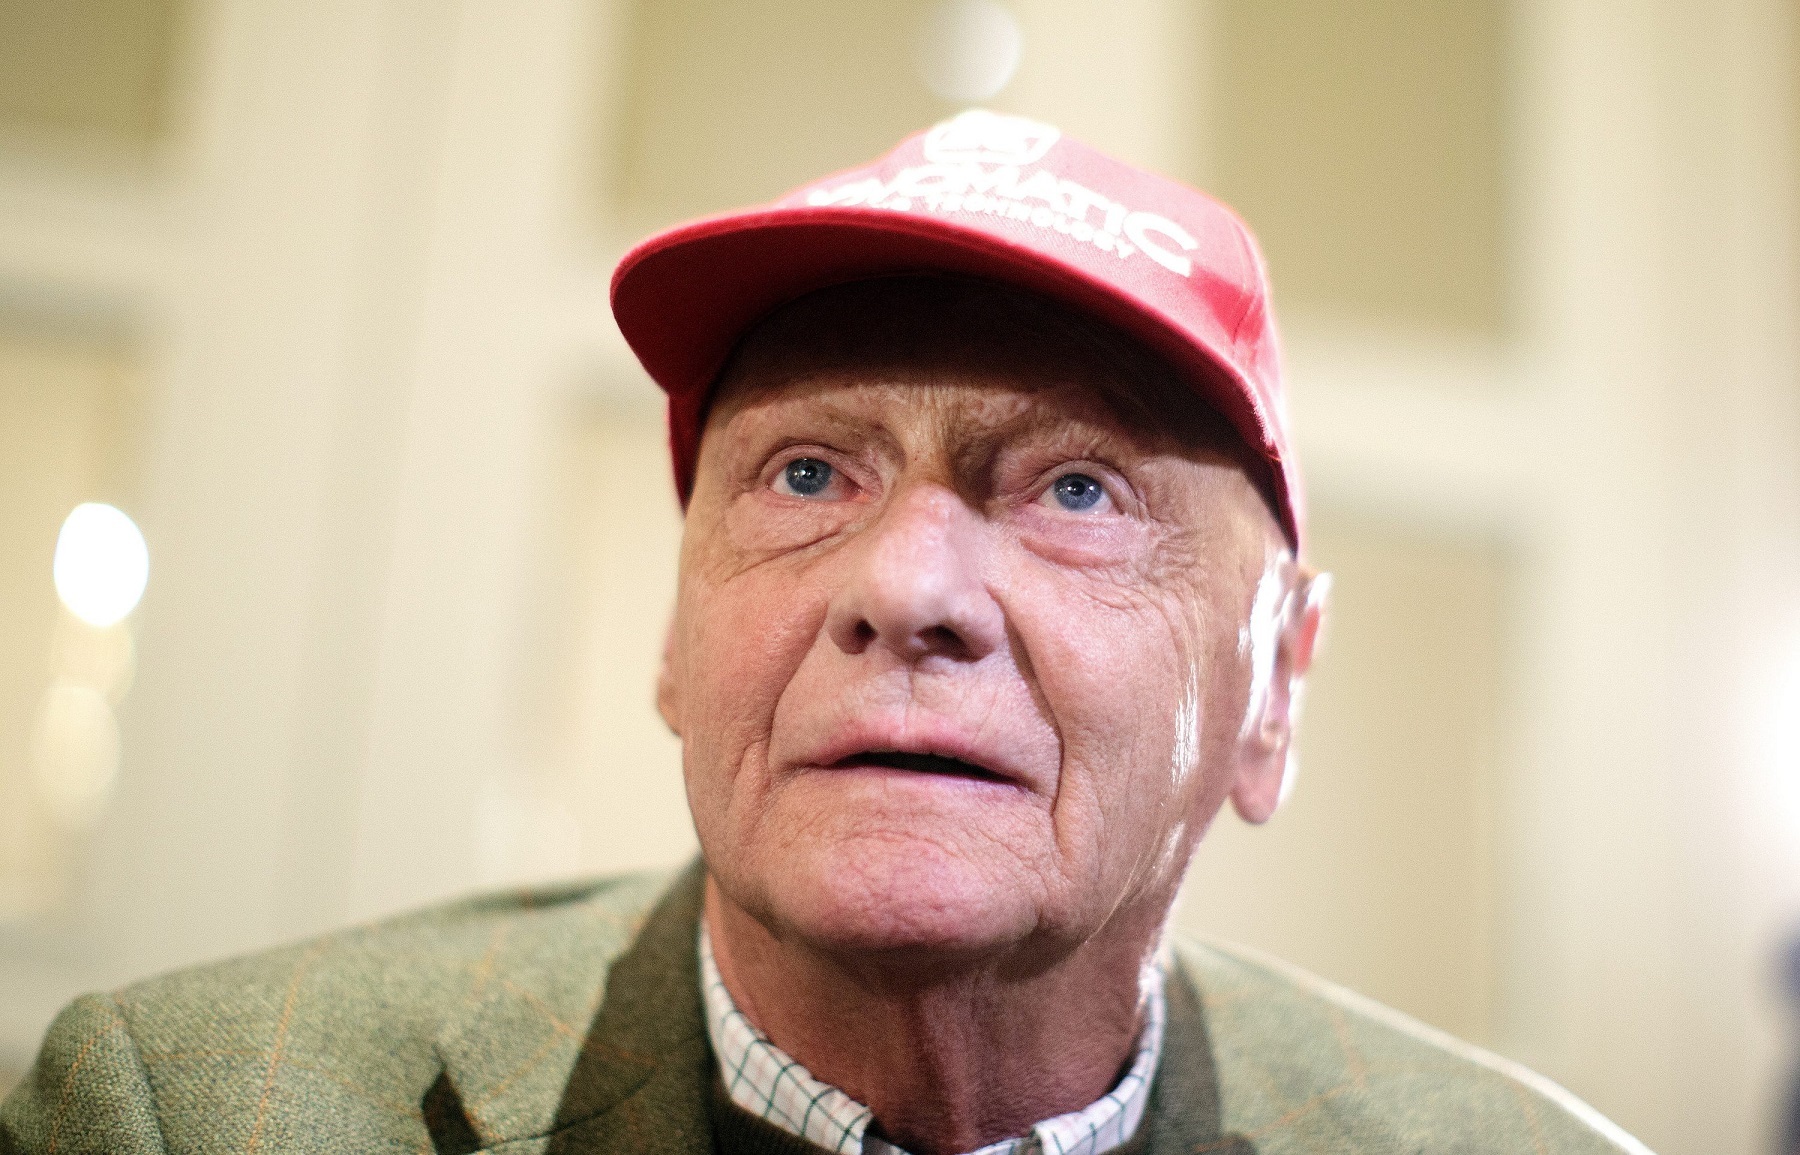 Niki Lauda, the Austrian Formula One Legend, dies aged 70